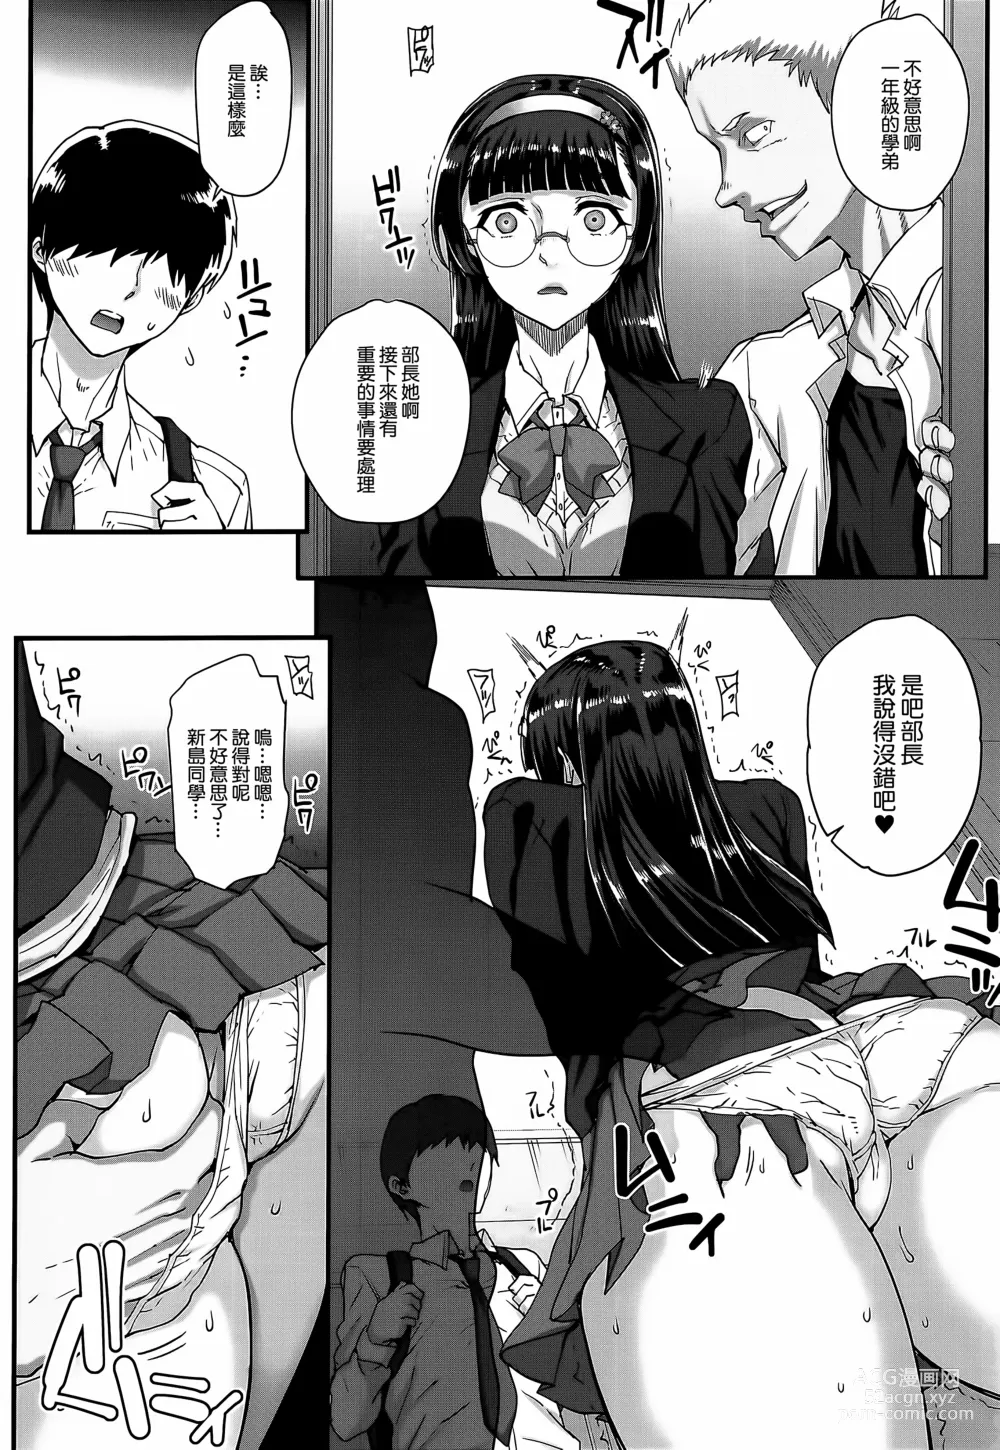 Page 12 of manga Aoharu Snatch - Santch a youth time